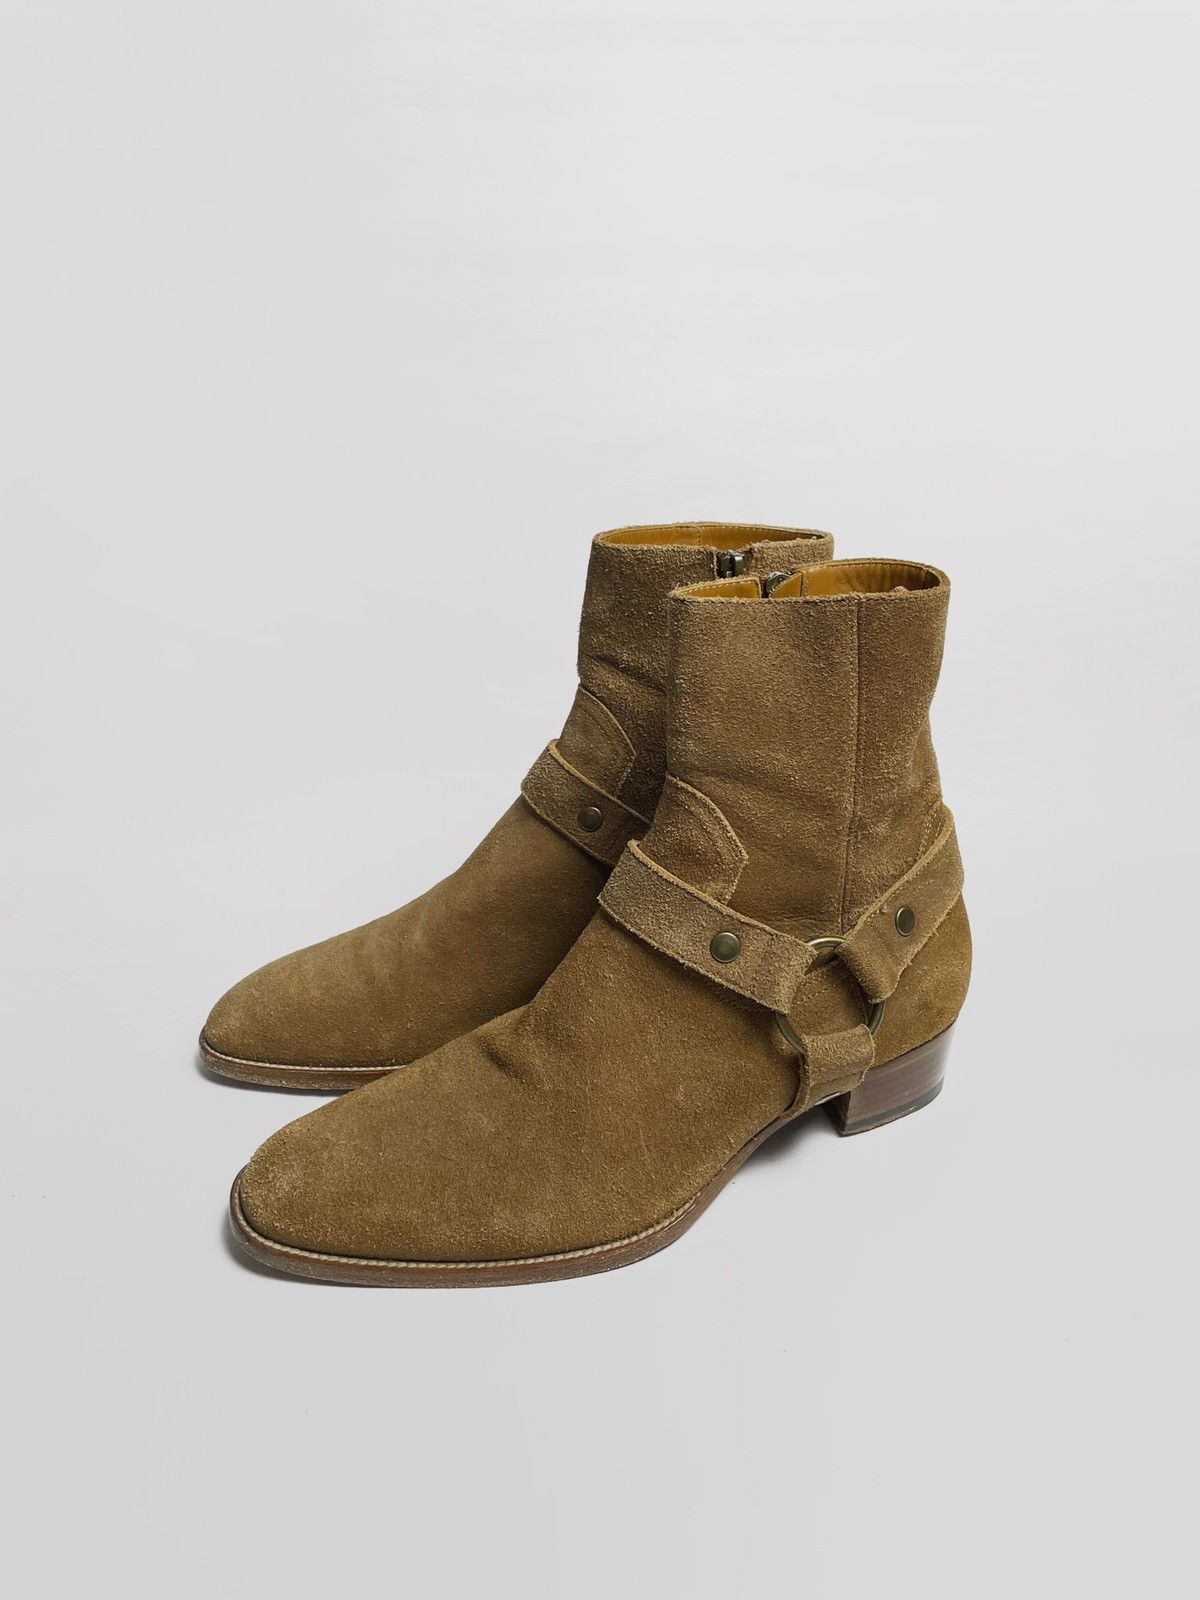 Saint Laurent Paris Suede Wyatt Boots - 1